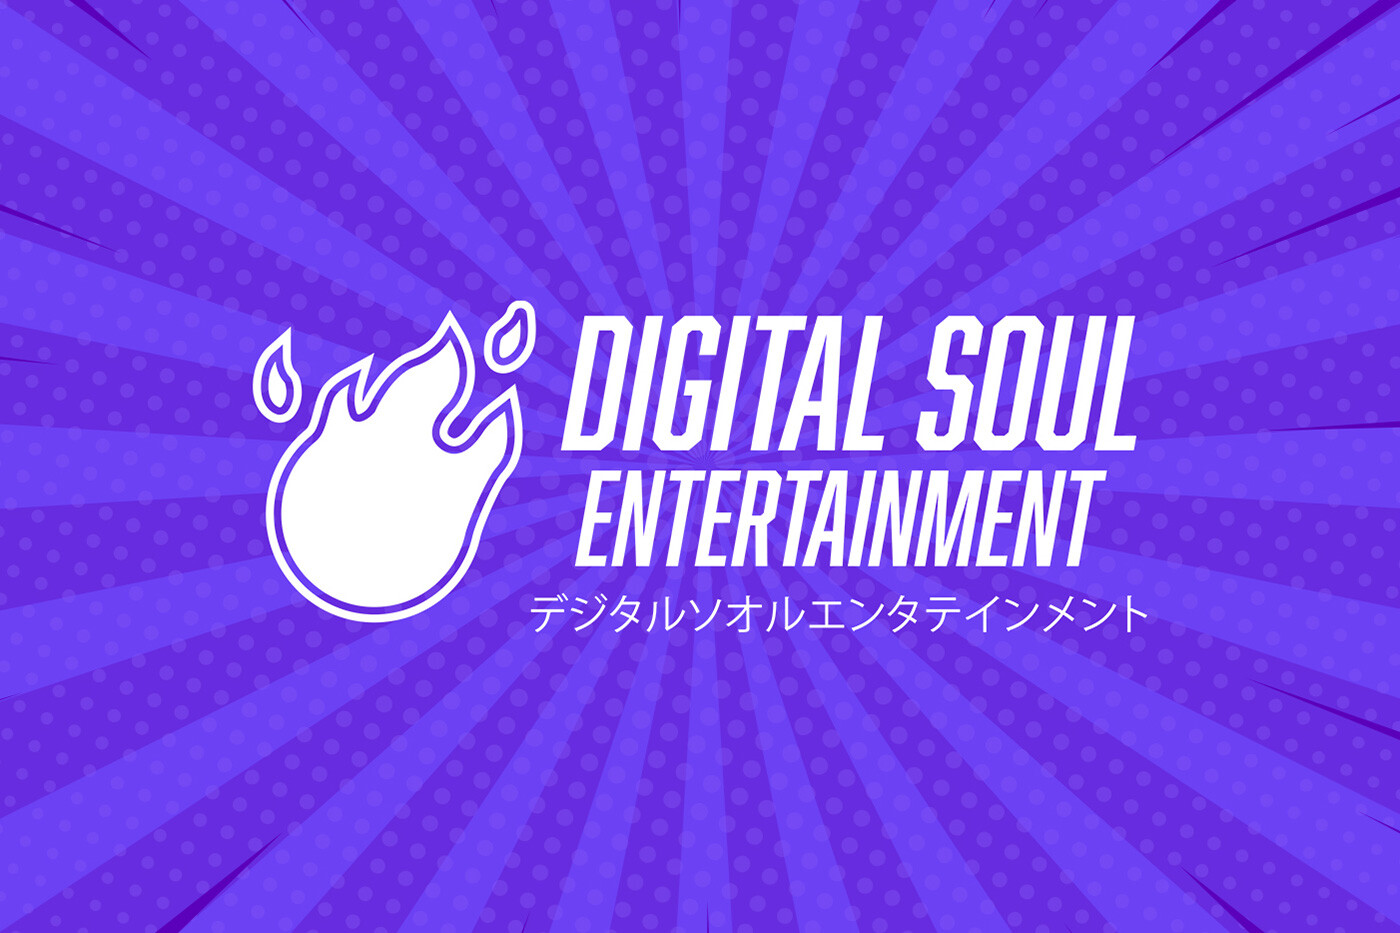 digital soul logo